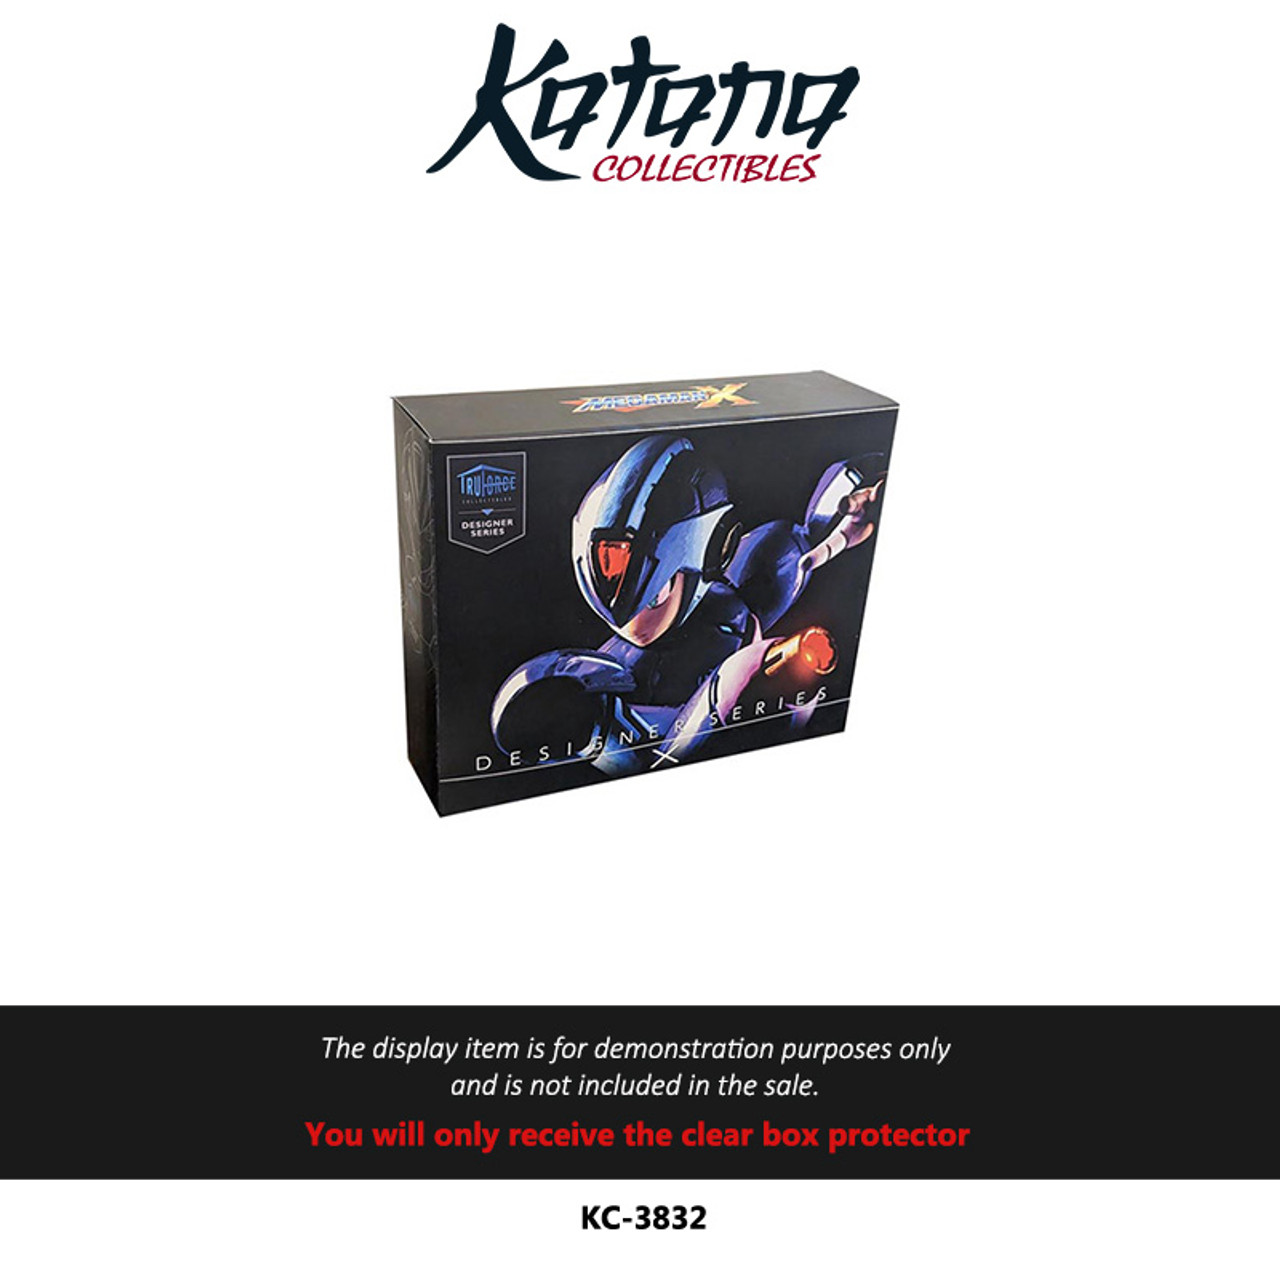 Katana Collectibles Protector For TruForce Collectibles Designer Series X Megaman X Figure